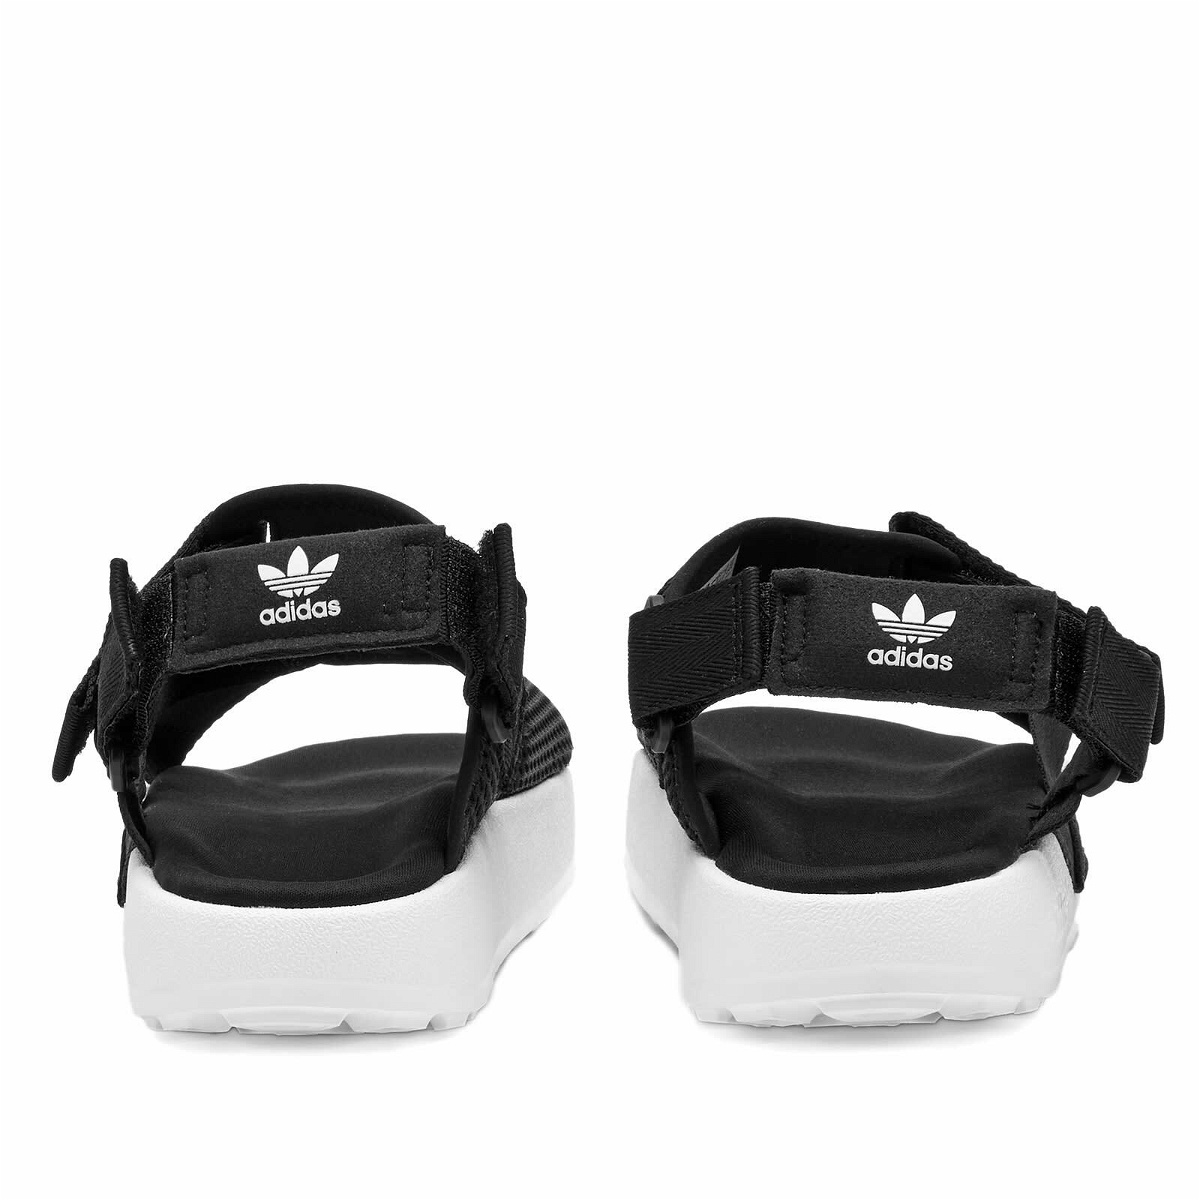 W adidas Adilette Core ADV in Black/White Adidas Women\'s